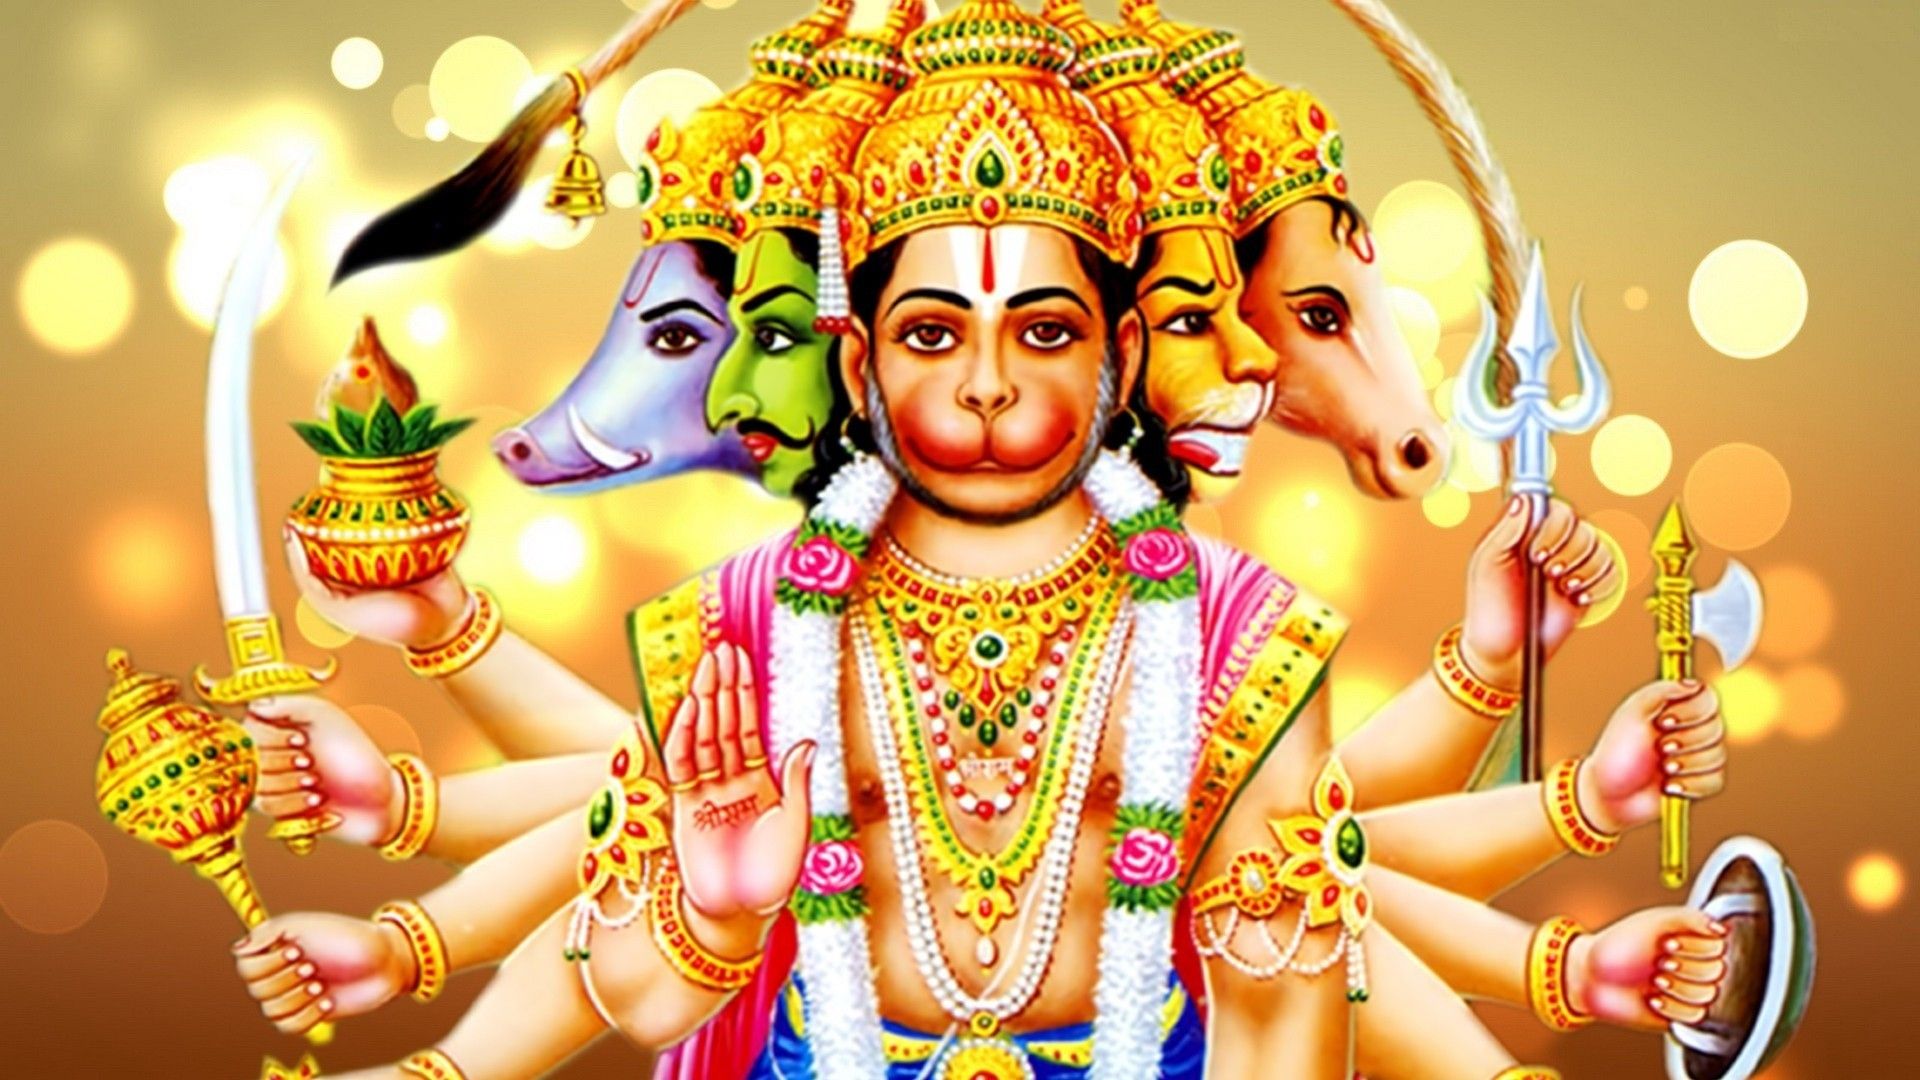 Download Wallpaper of Panchmukhi God Hanuman